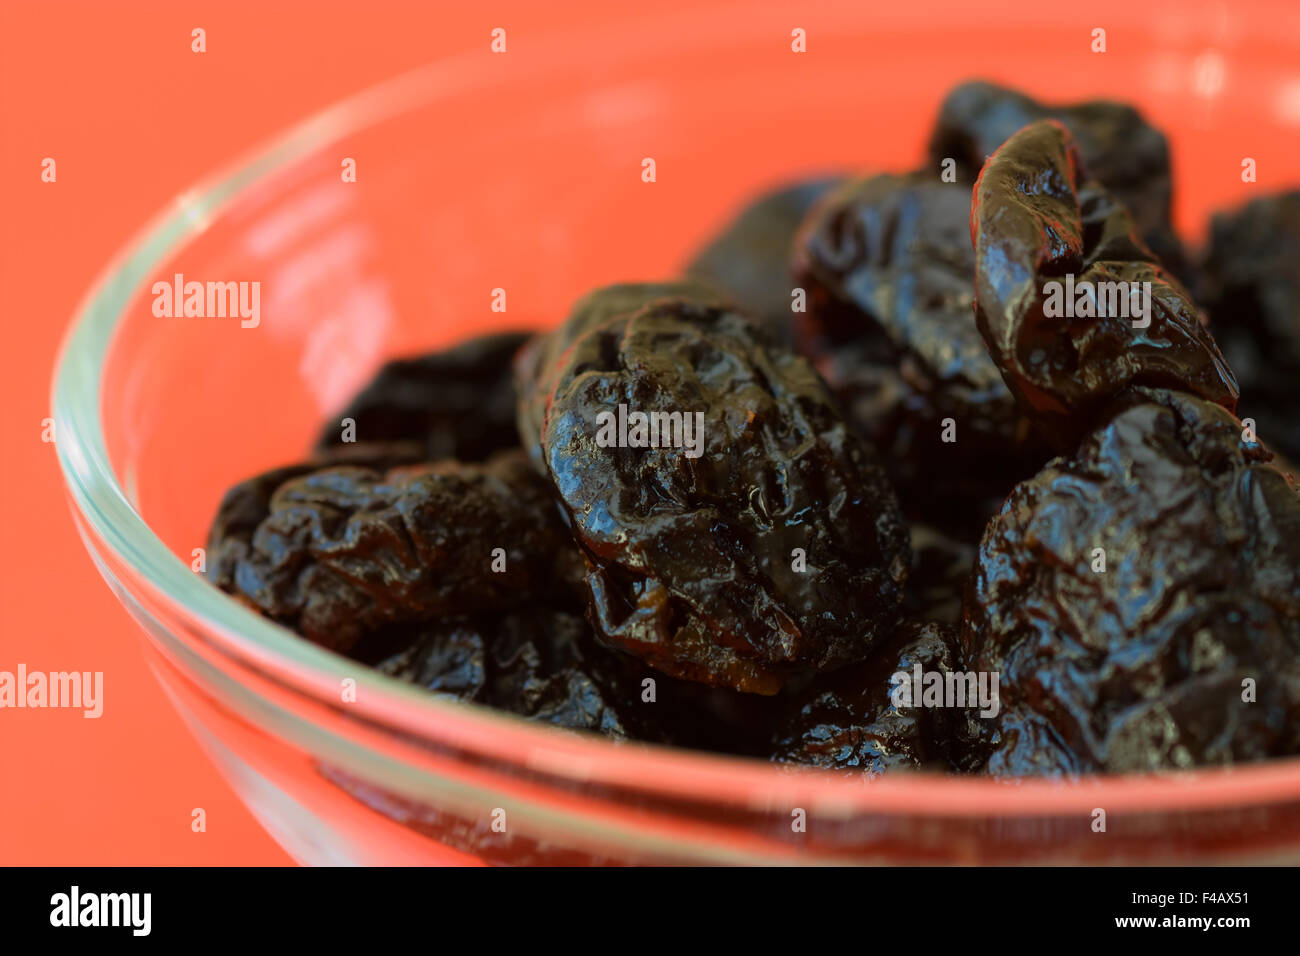 Getrocknete Pflaumen - Dried prunes Stock Photo